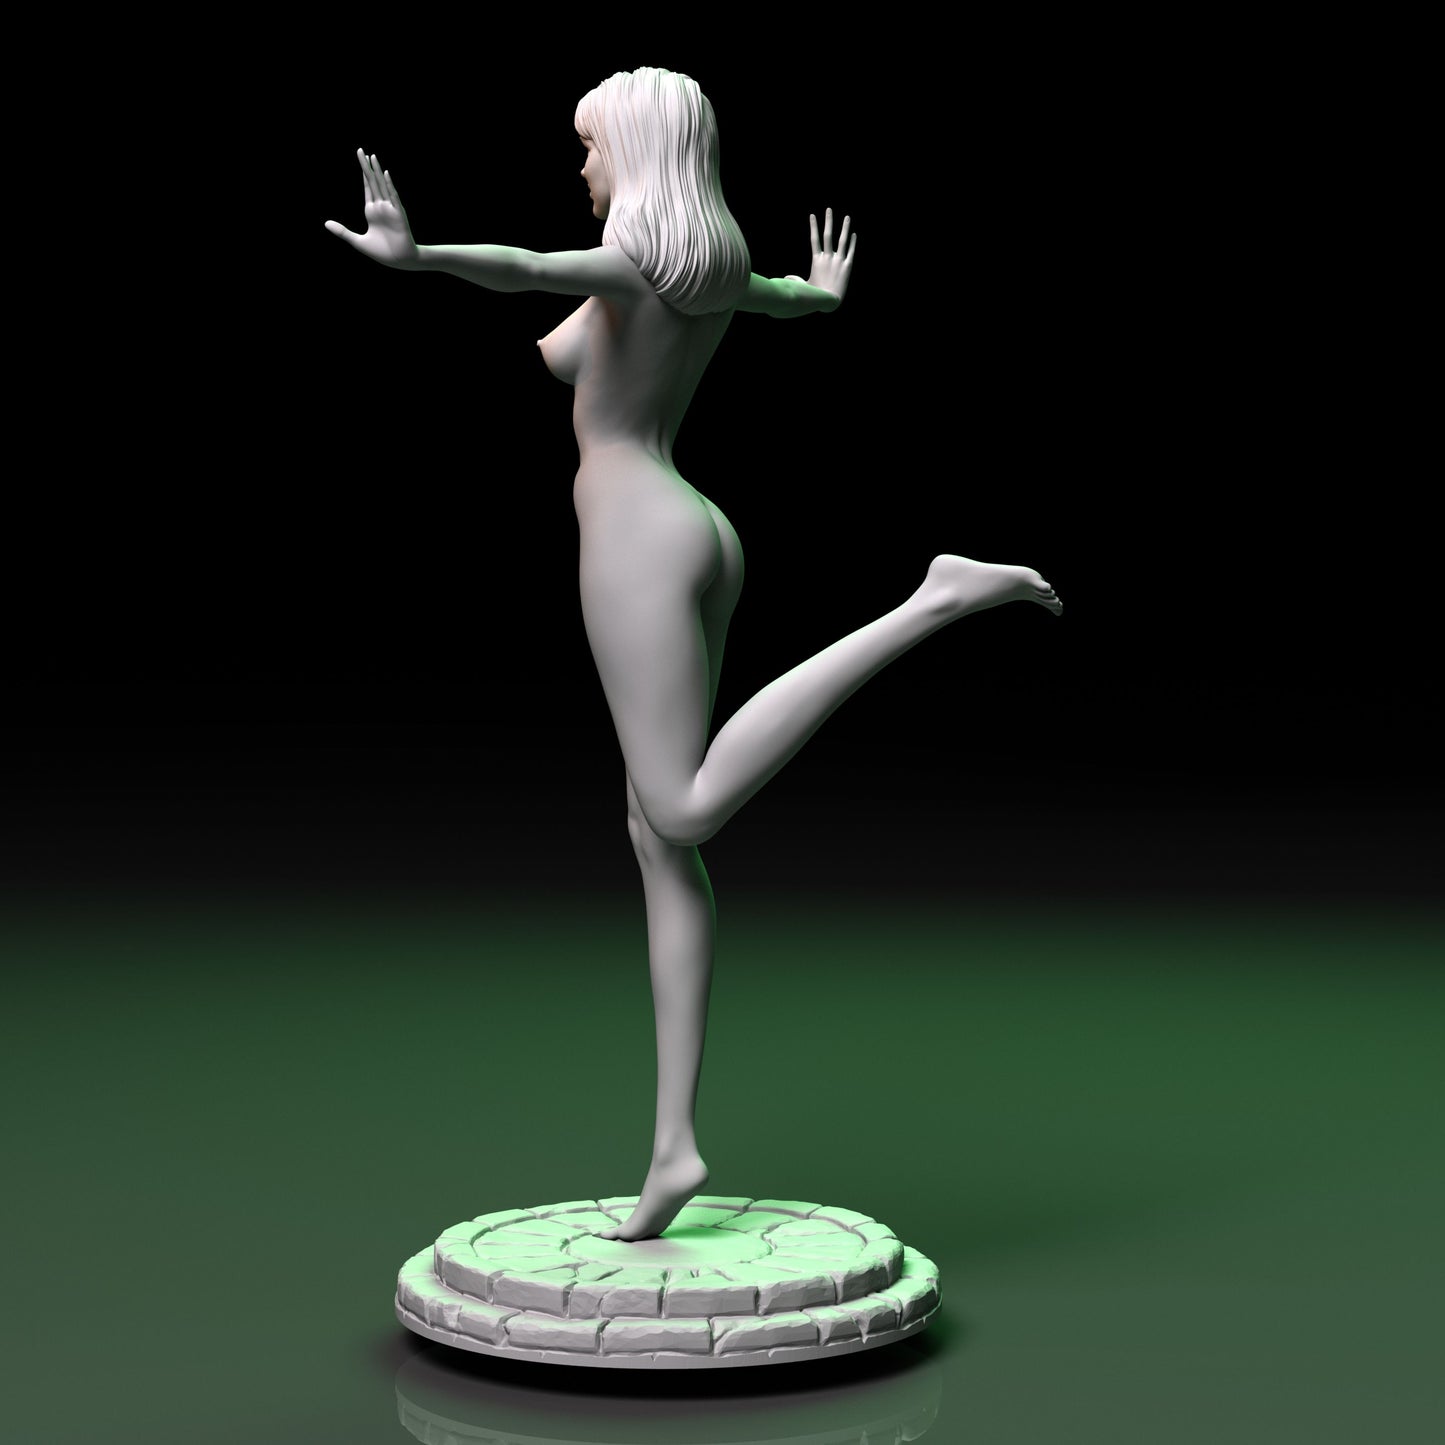 Univers Princess | 3D Printed | Funart | Unpainted | NSFW | Figurine